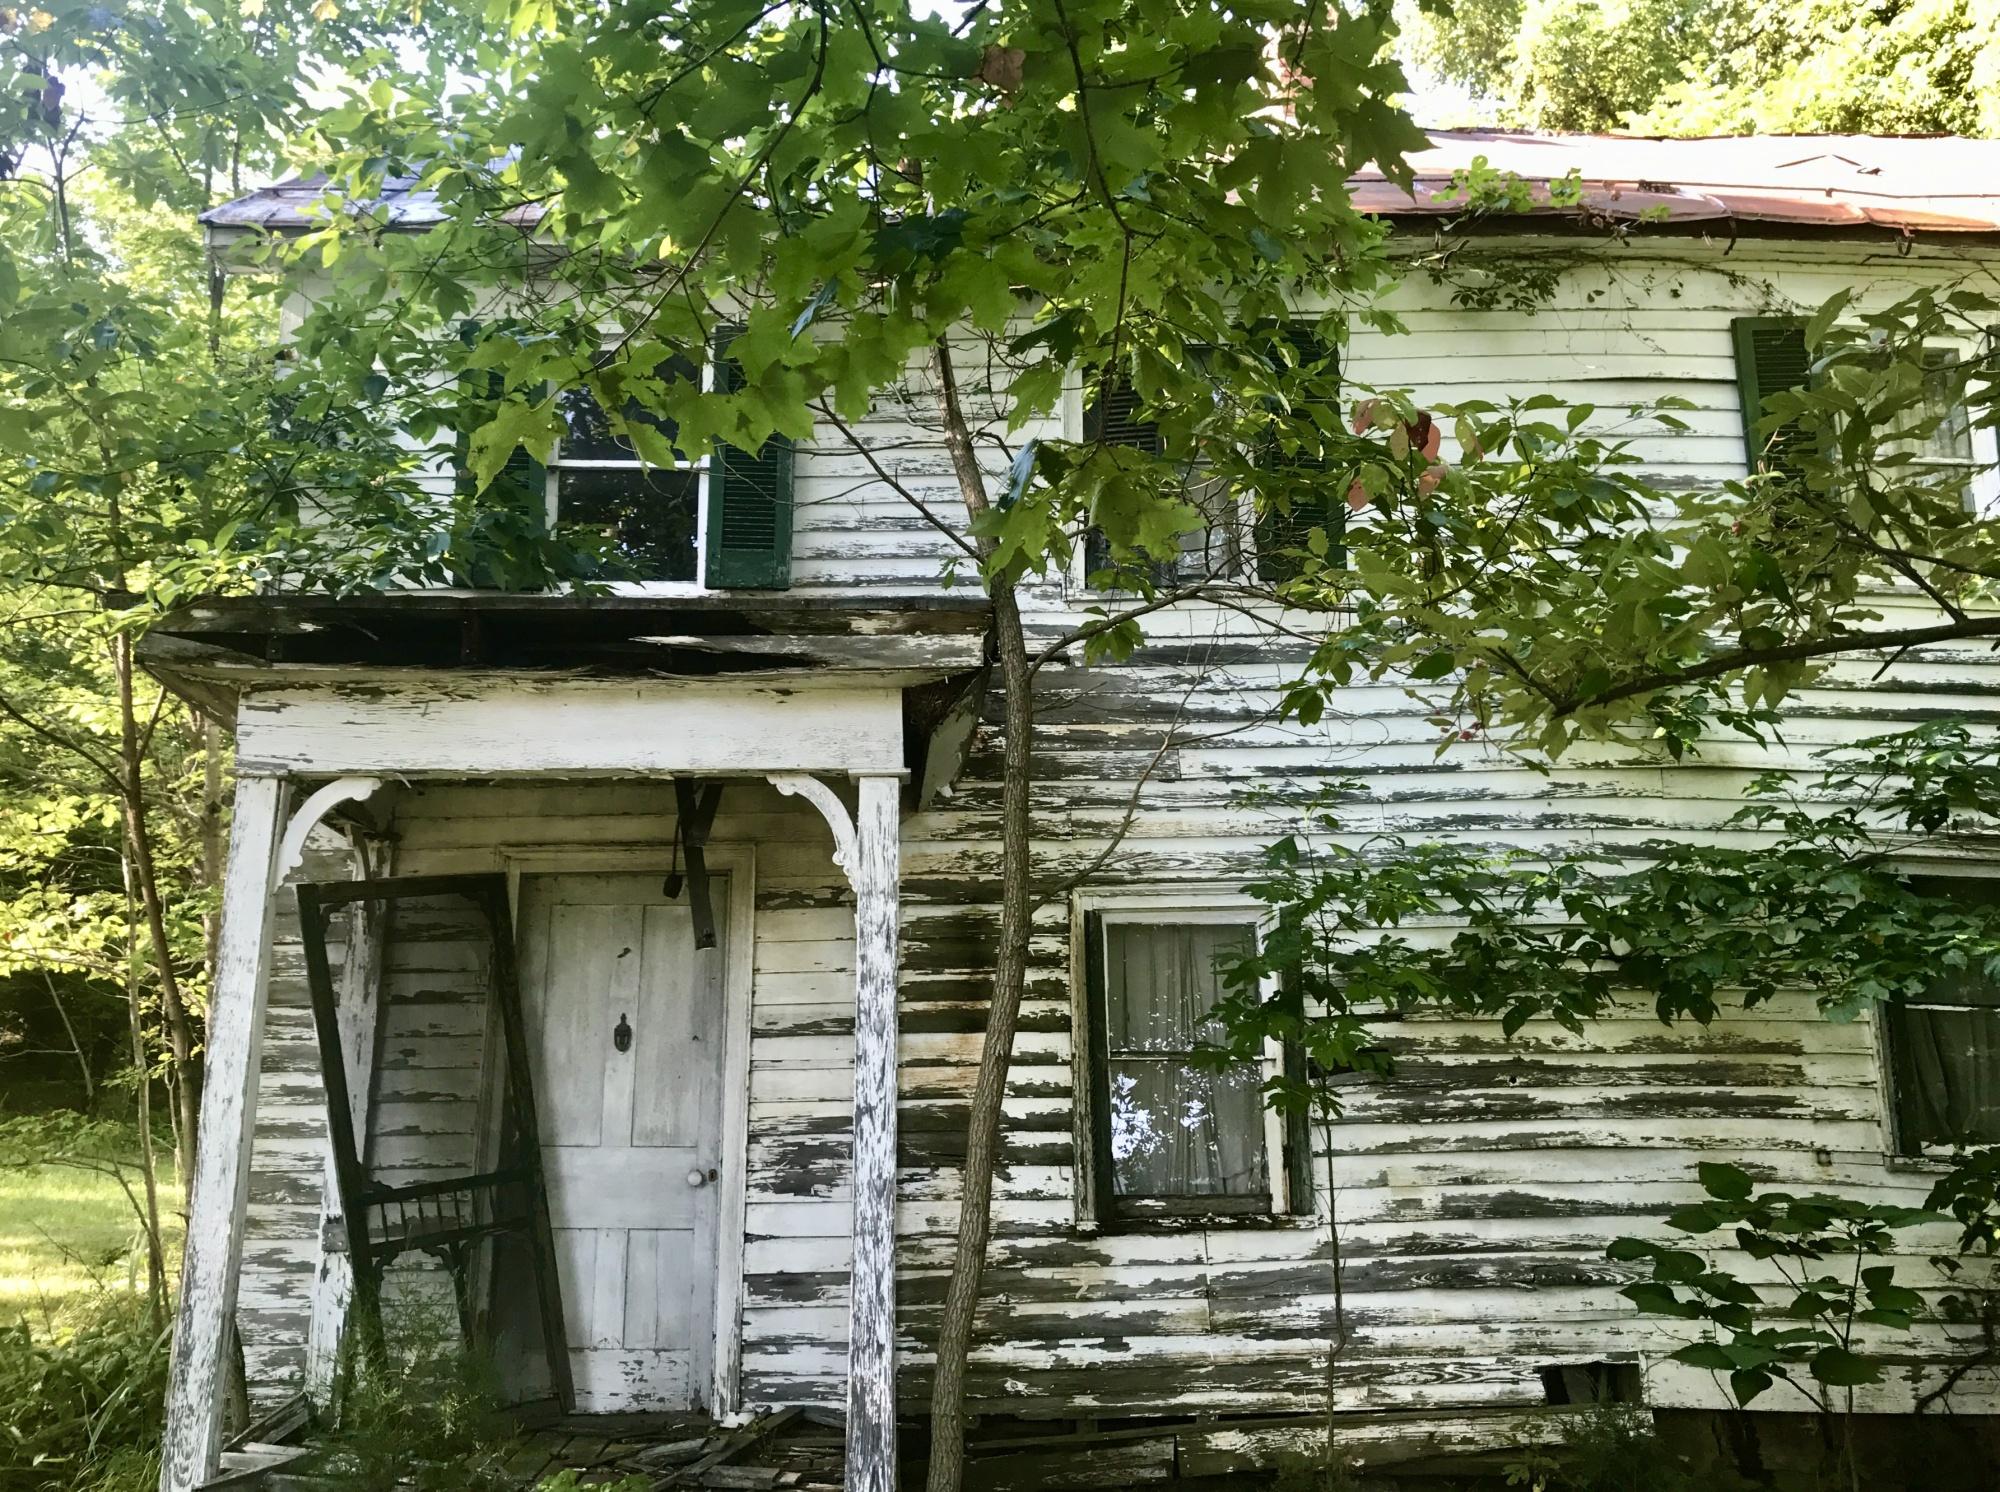 Willa Cather's birth home, a white farmhouse in disrepair